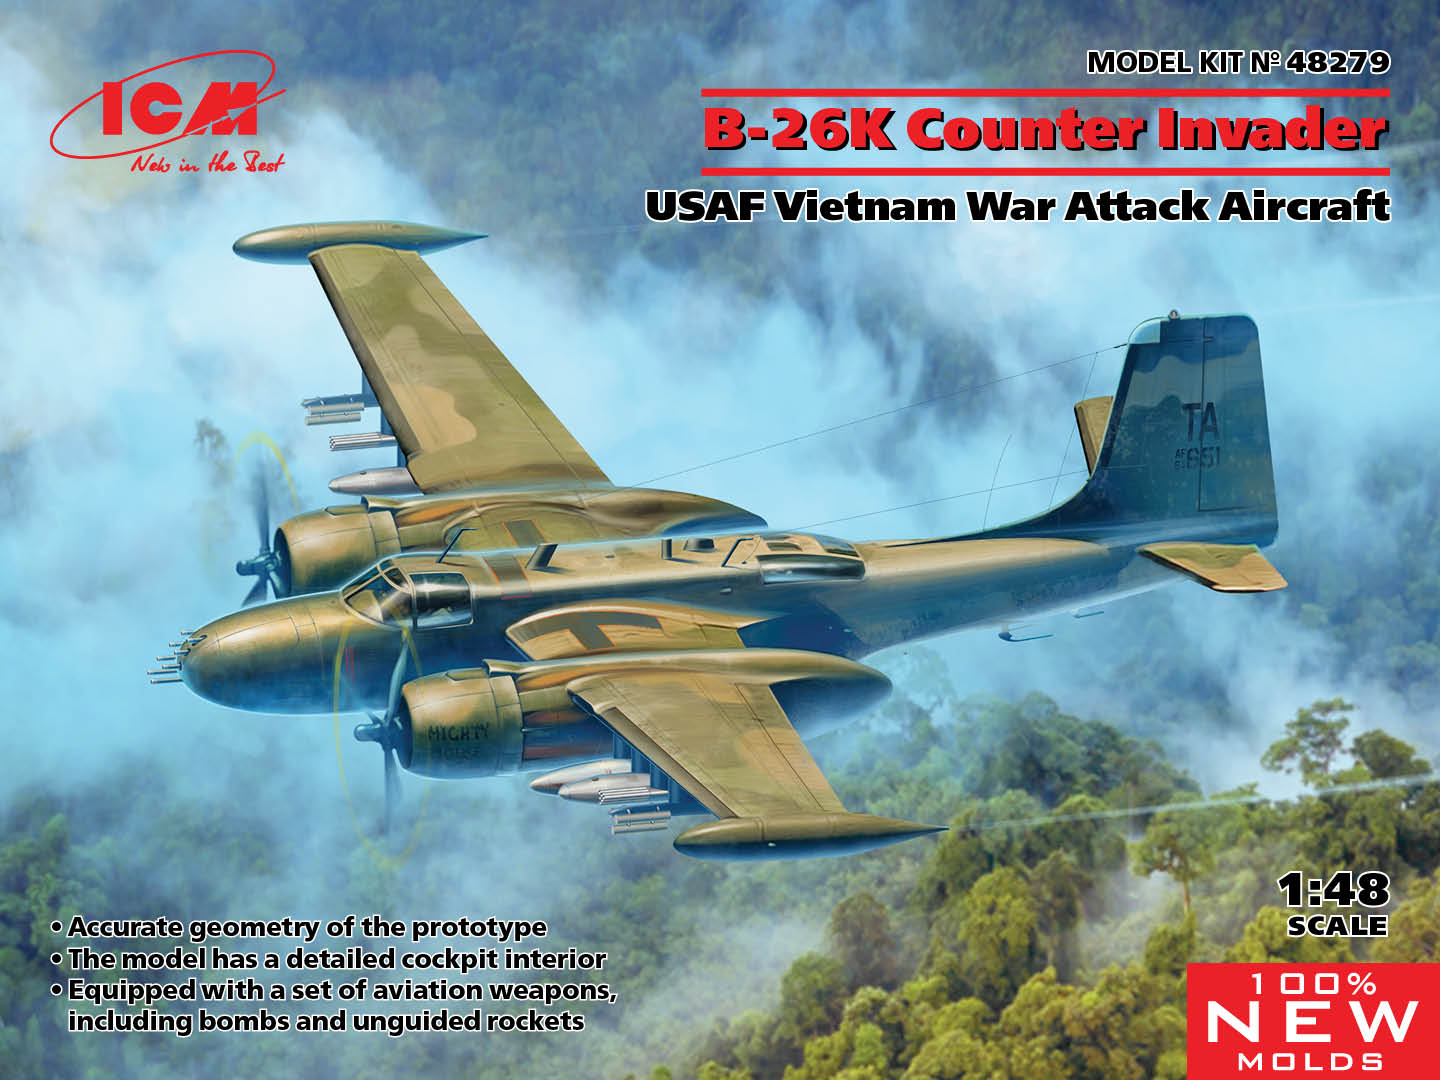 48279  авиация  B-26K Counter Invader USAF Vietnam War Attack Aircraft  (1:48)